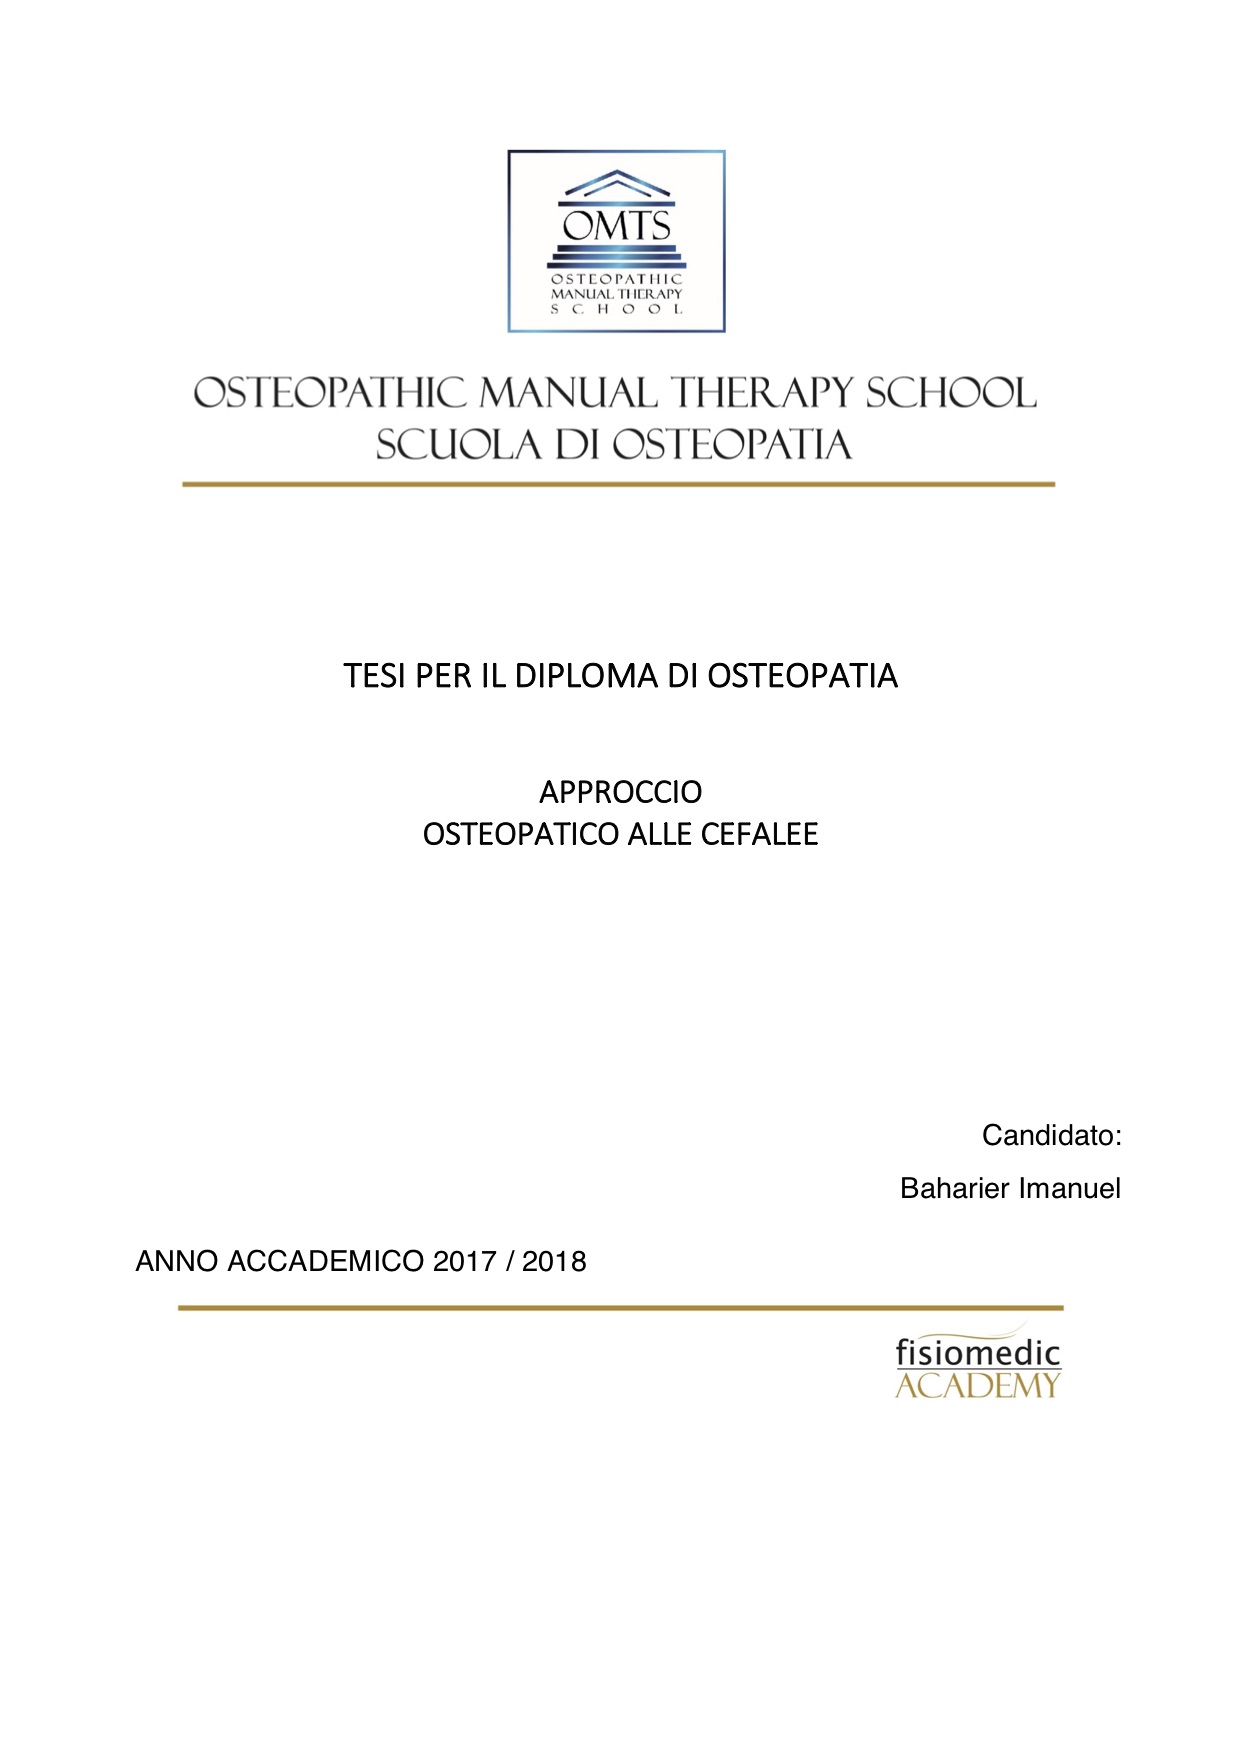 Imanuel Baharier Tesi Diploma Osteopatia 2018